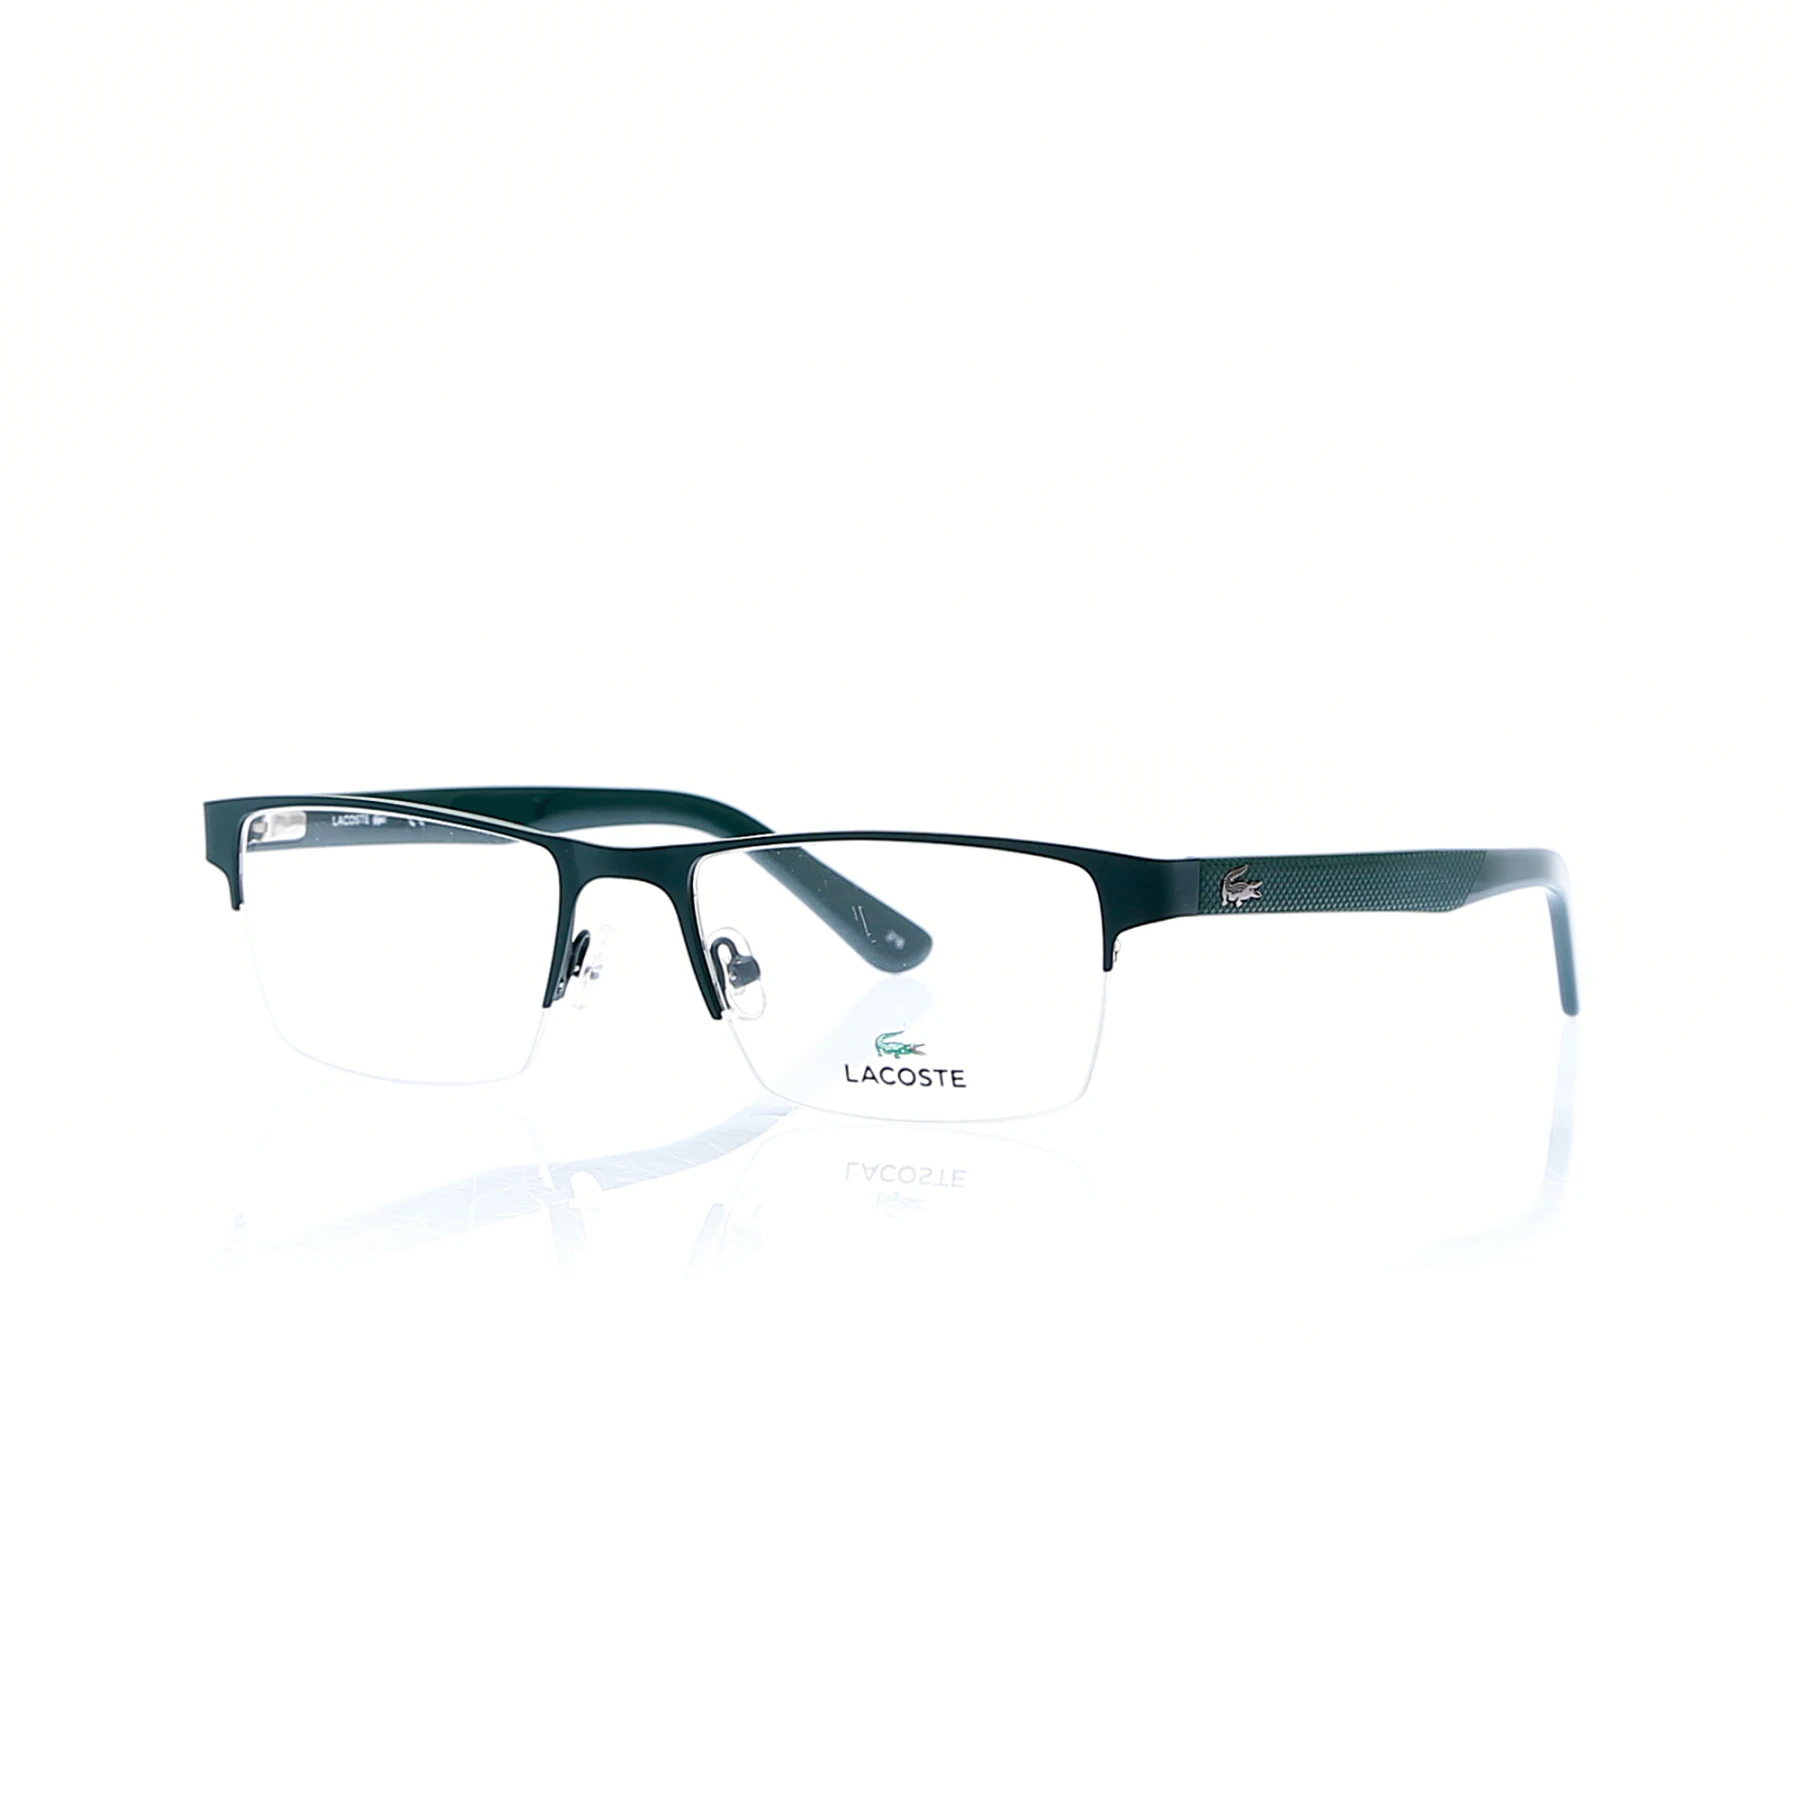 

Male Image glasses lcc 2237 315 metal green organic rectangle rectangular 55-19-145 lacoste